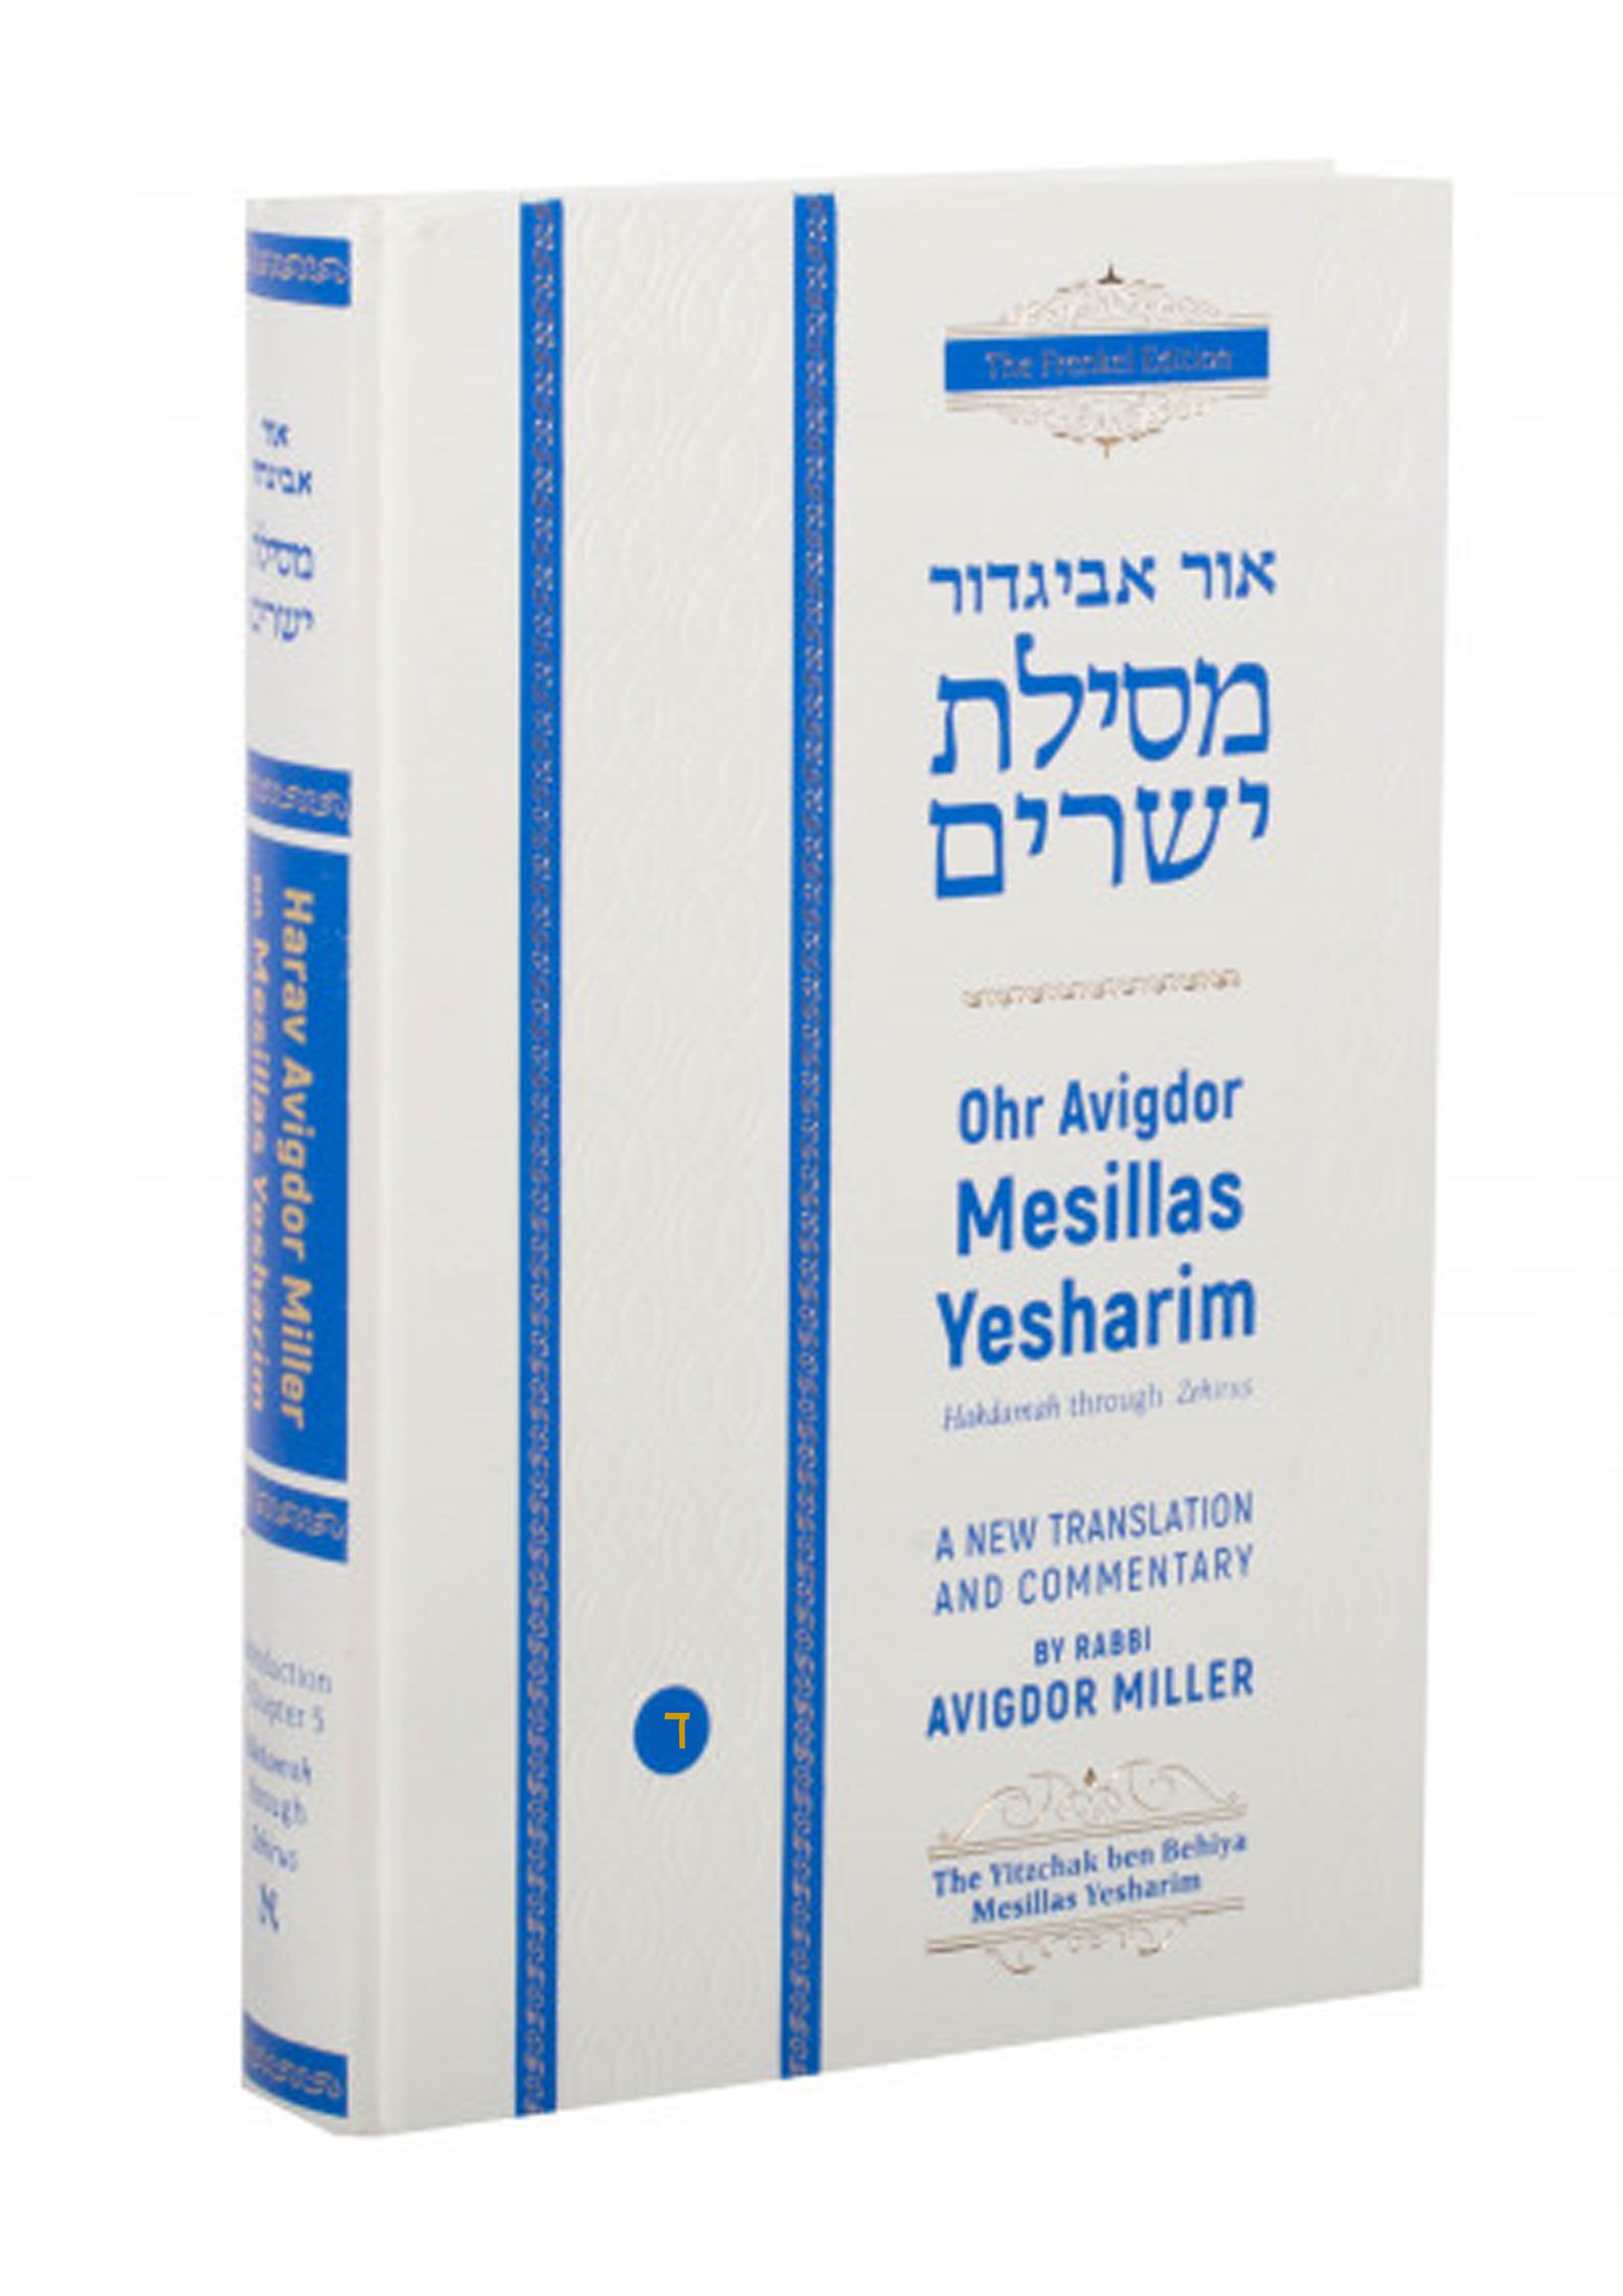 Or Avigdor Mesillas Yesharim - A New Translation - Vol 4